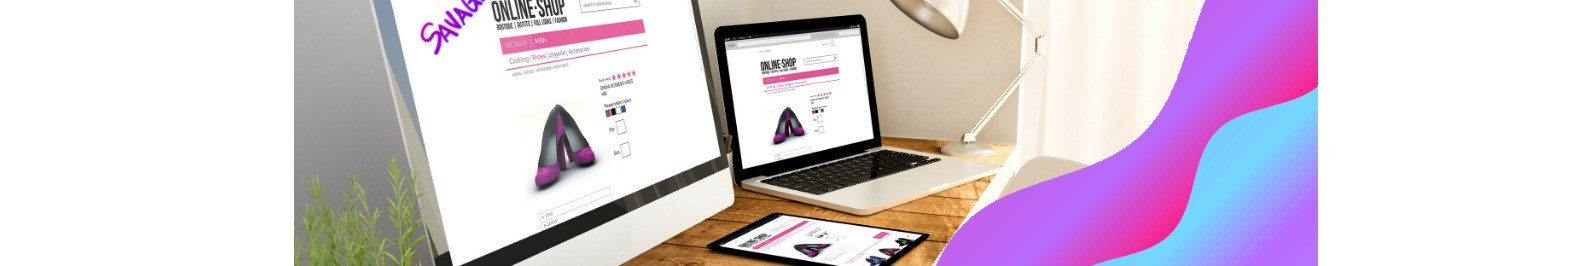 Web Design Marbella - SEO, digital marketing